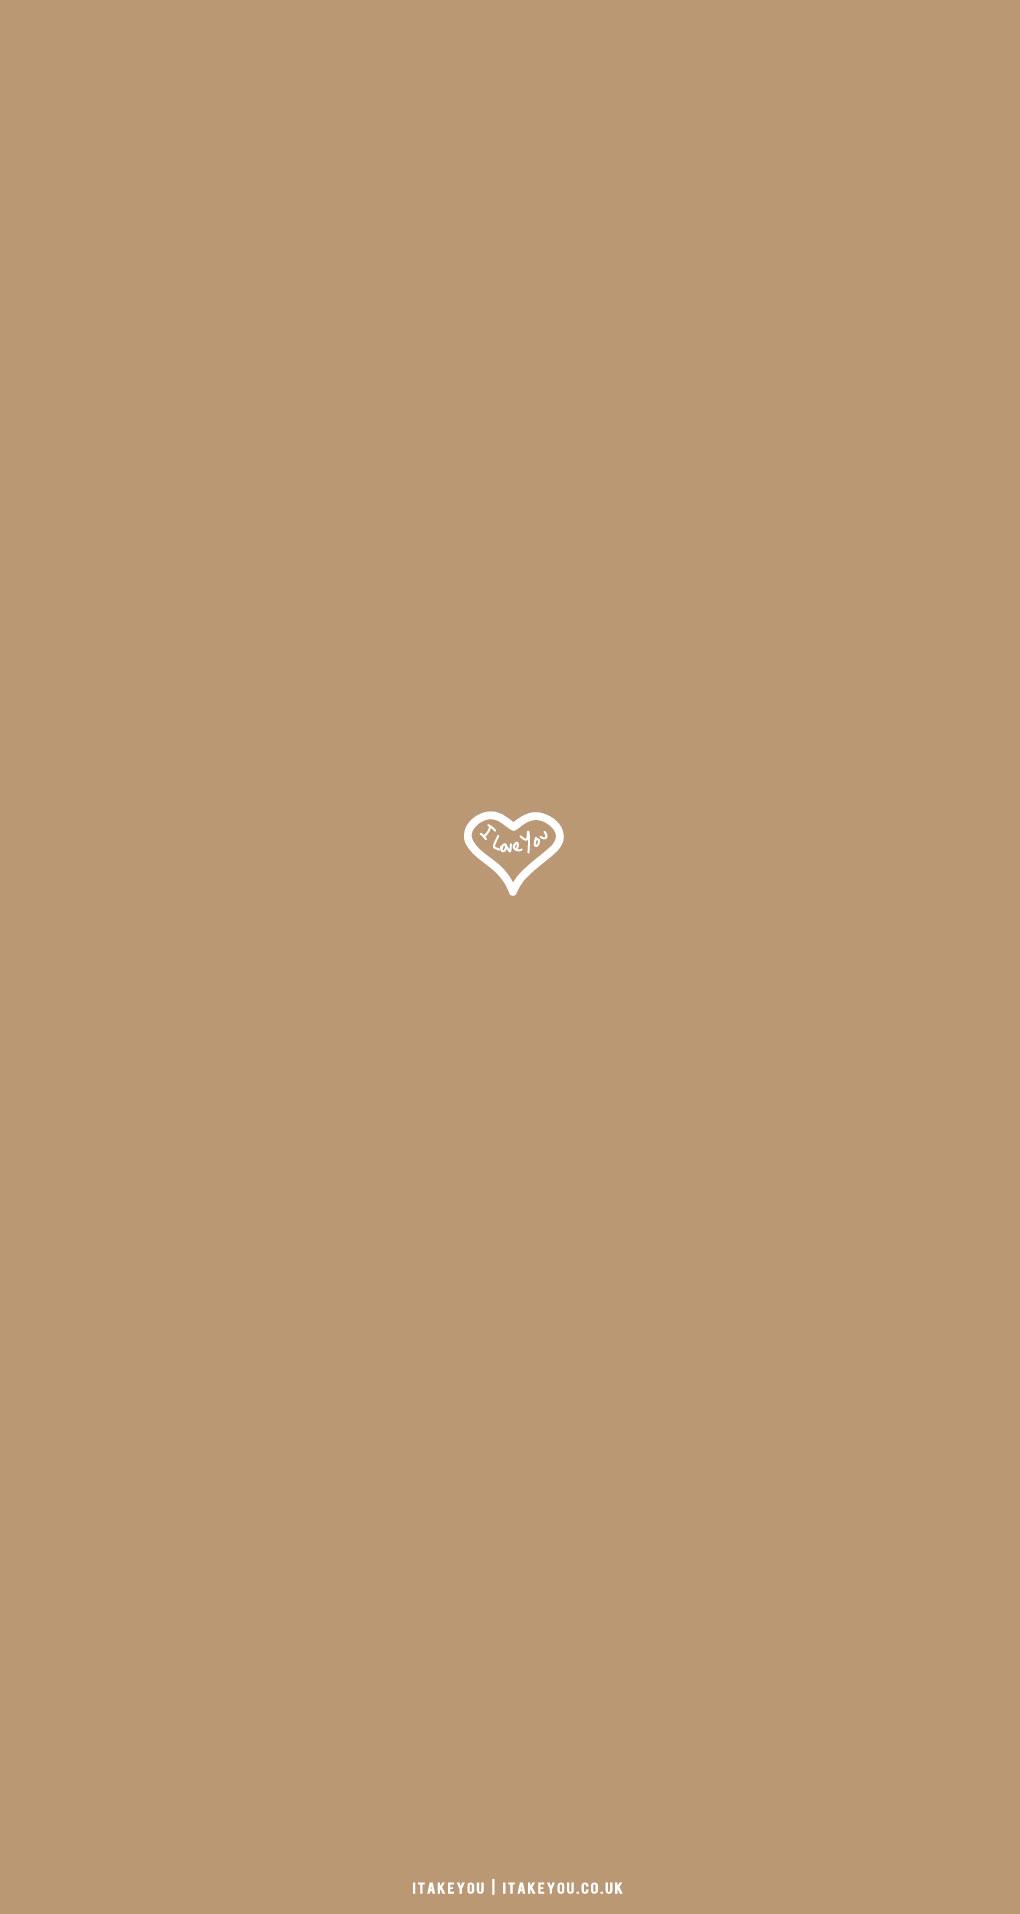 Cute Brown Heart Aesthetic Wallpaper For Phone